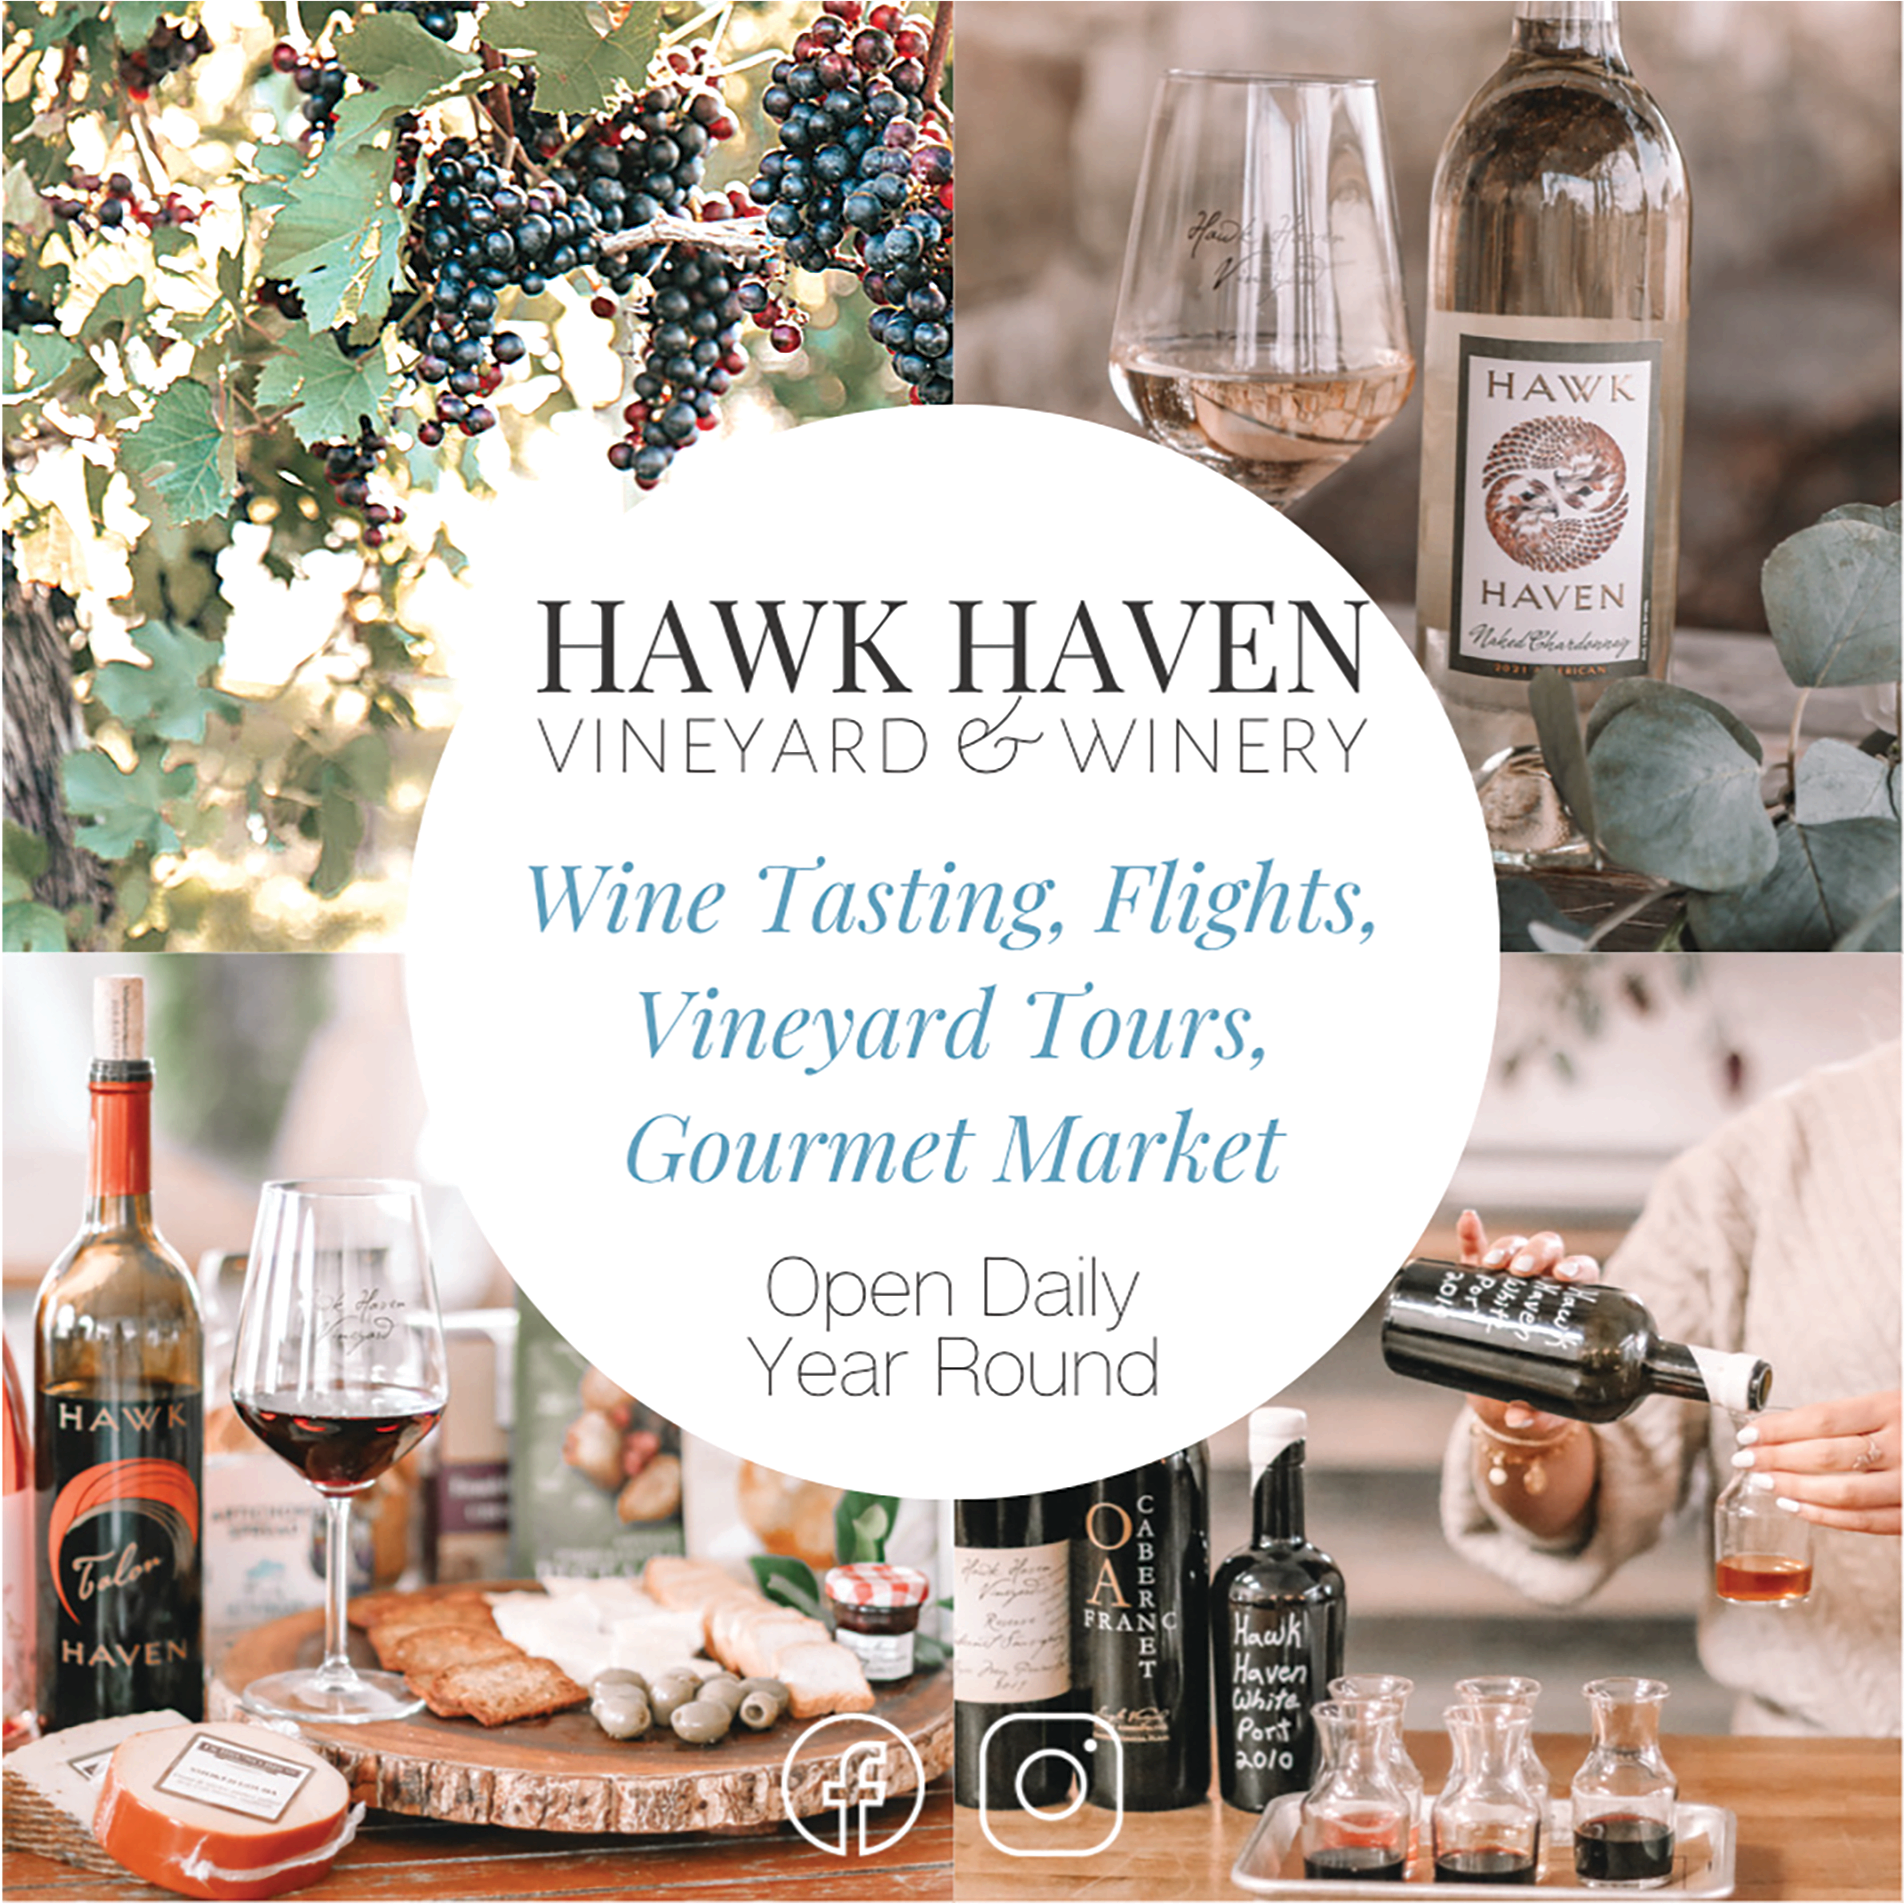 Hawk Haven Vineyard & Winery Print Ad